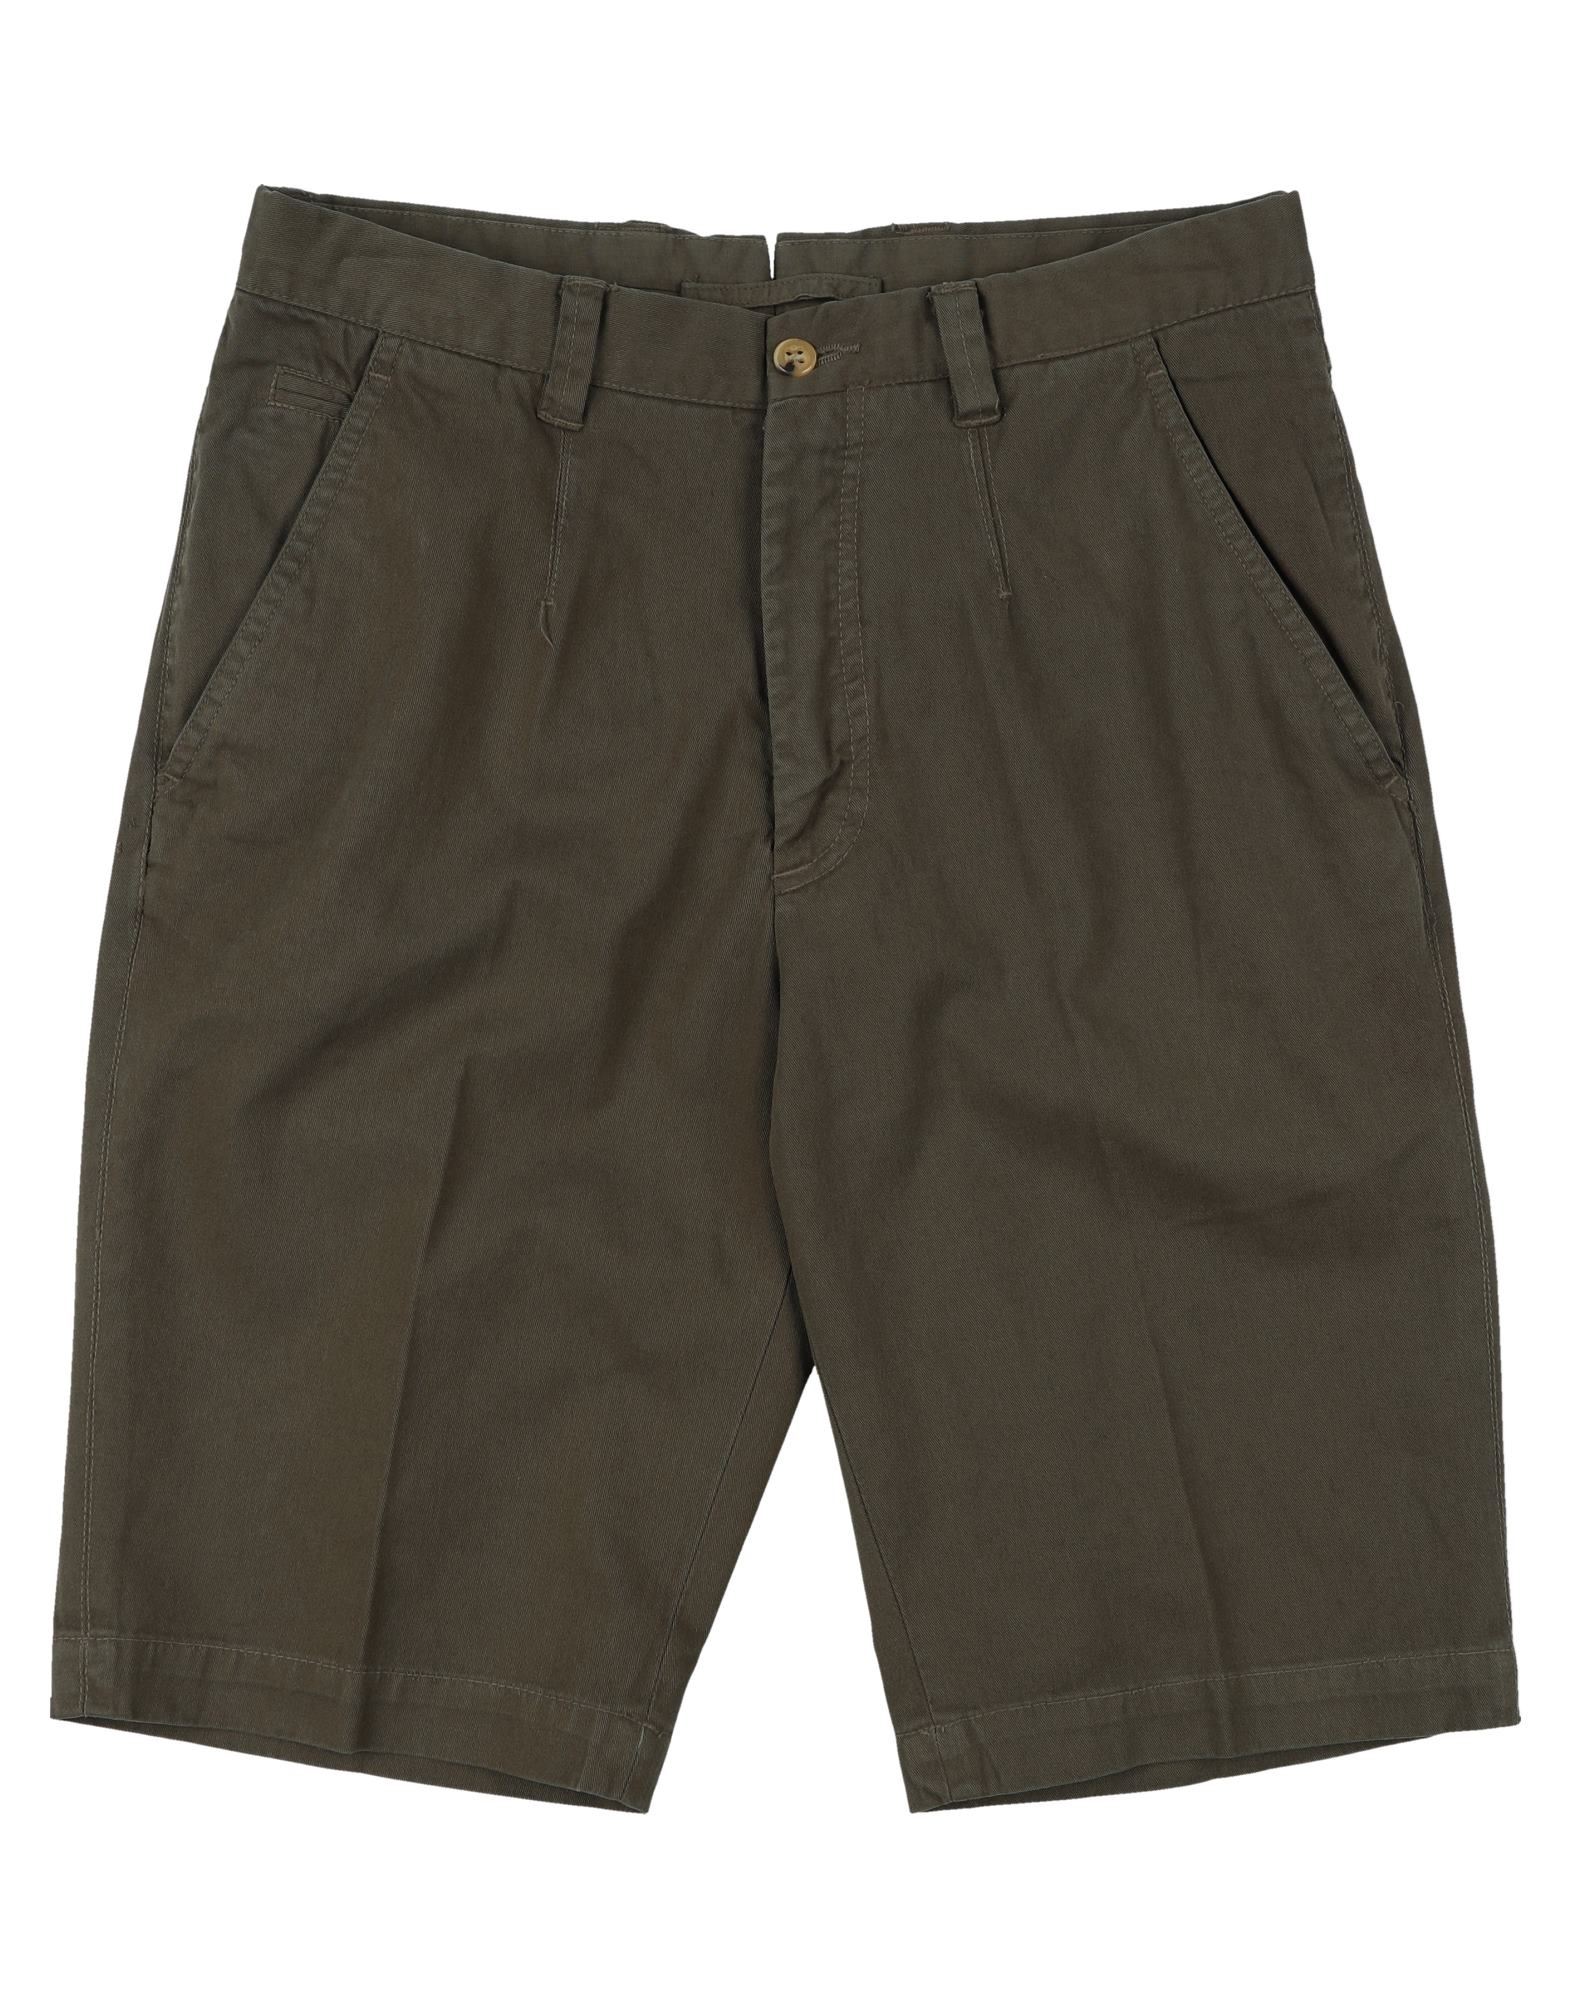 JASPER REED Shorts & Bermuda Shorts